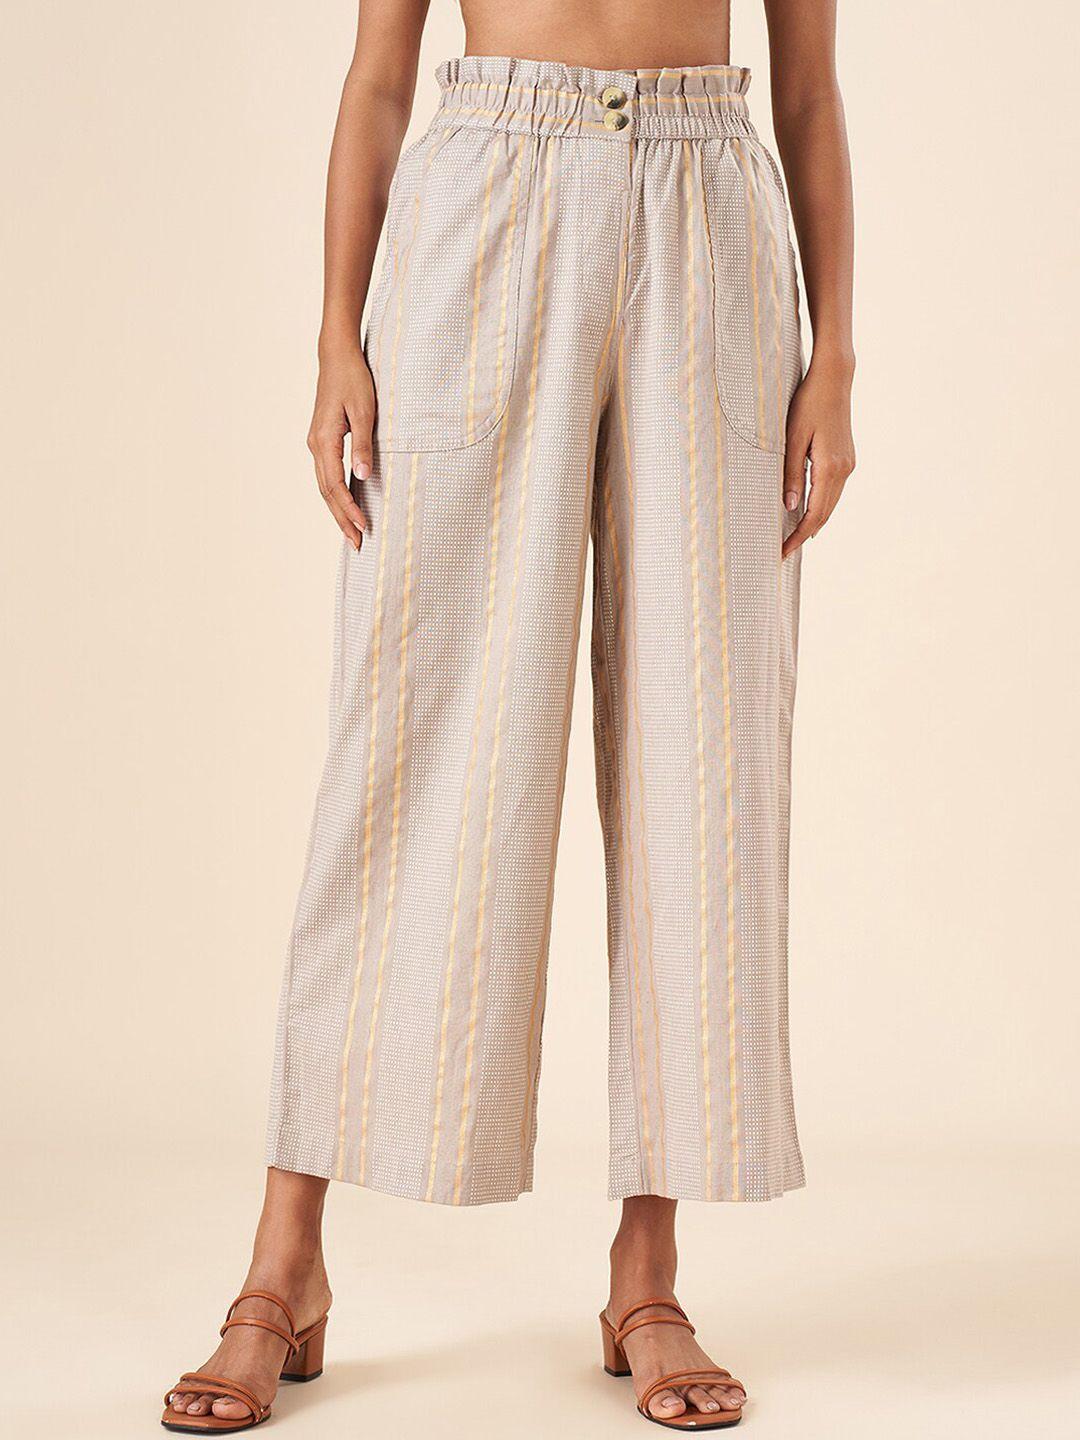 akkriti-by-pantaloons-women-striped-flared-mid-rise-plain-parallel-trousers